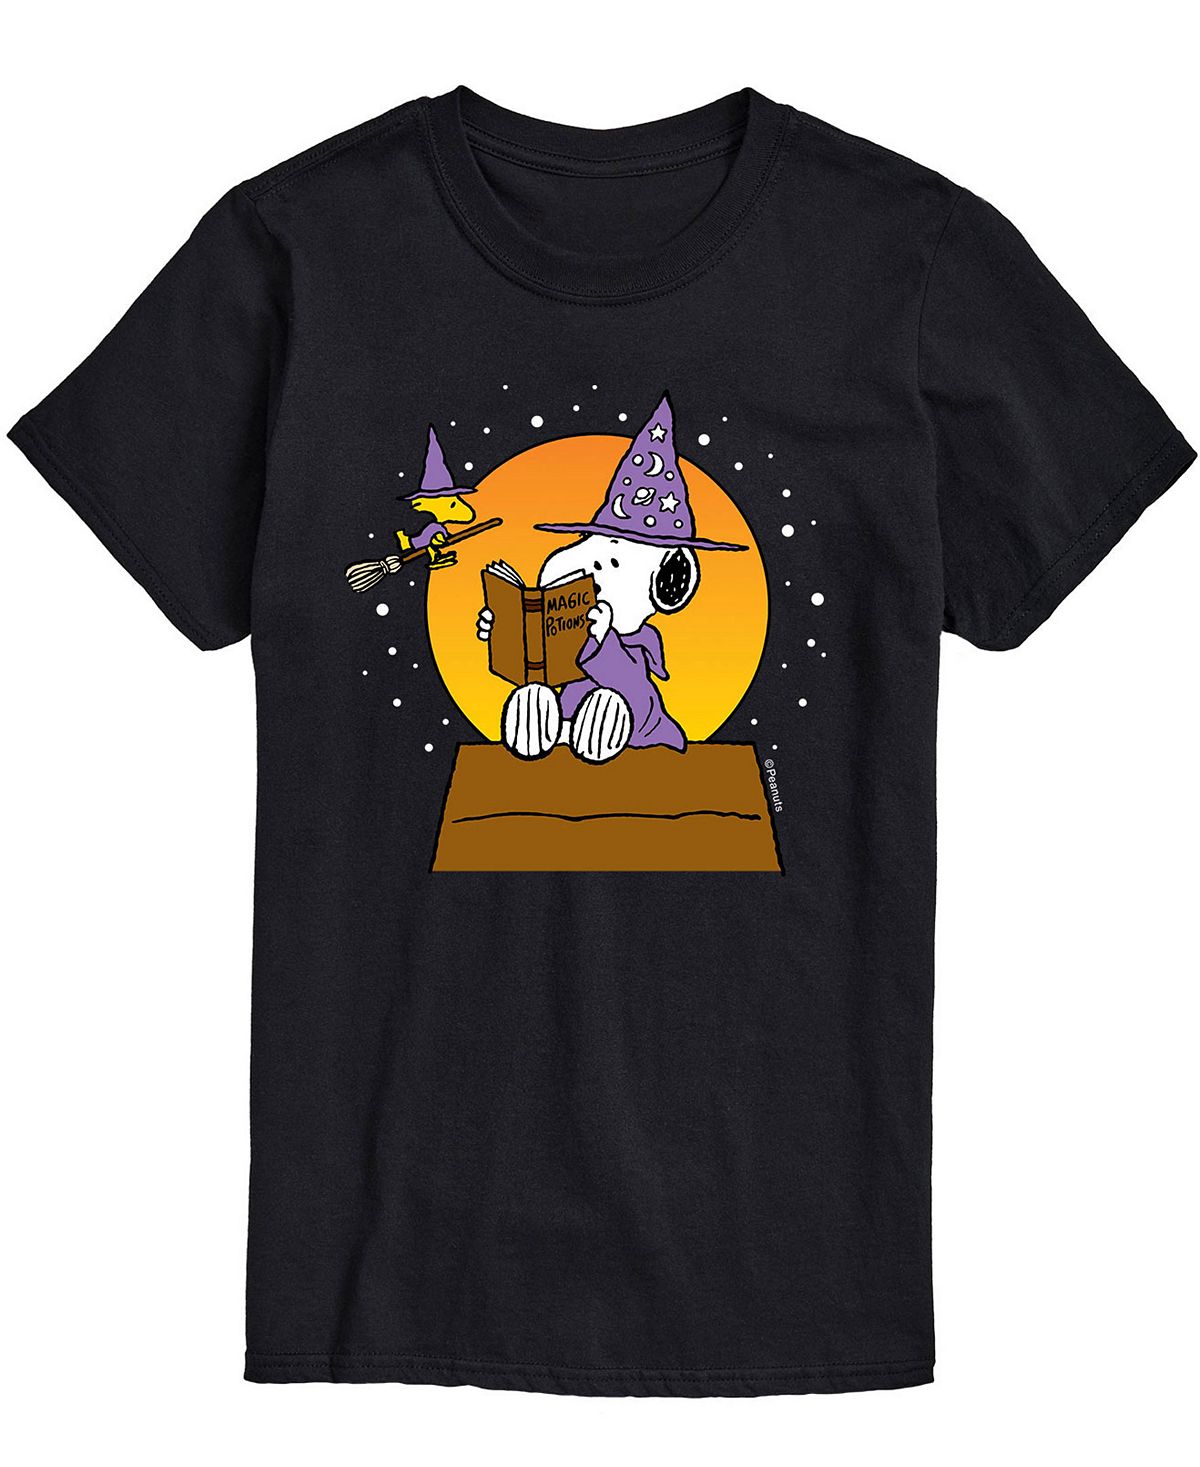 Мужская футболка Peanuts Snoopy Warlock AIRWAVES